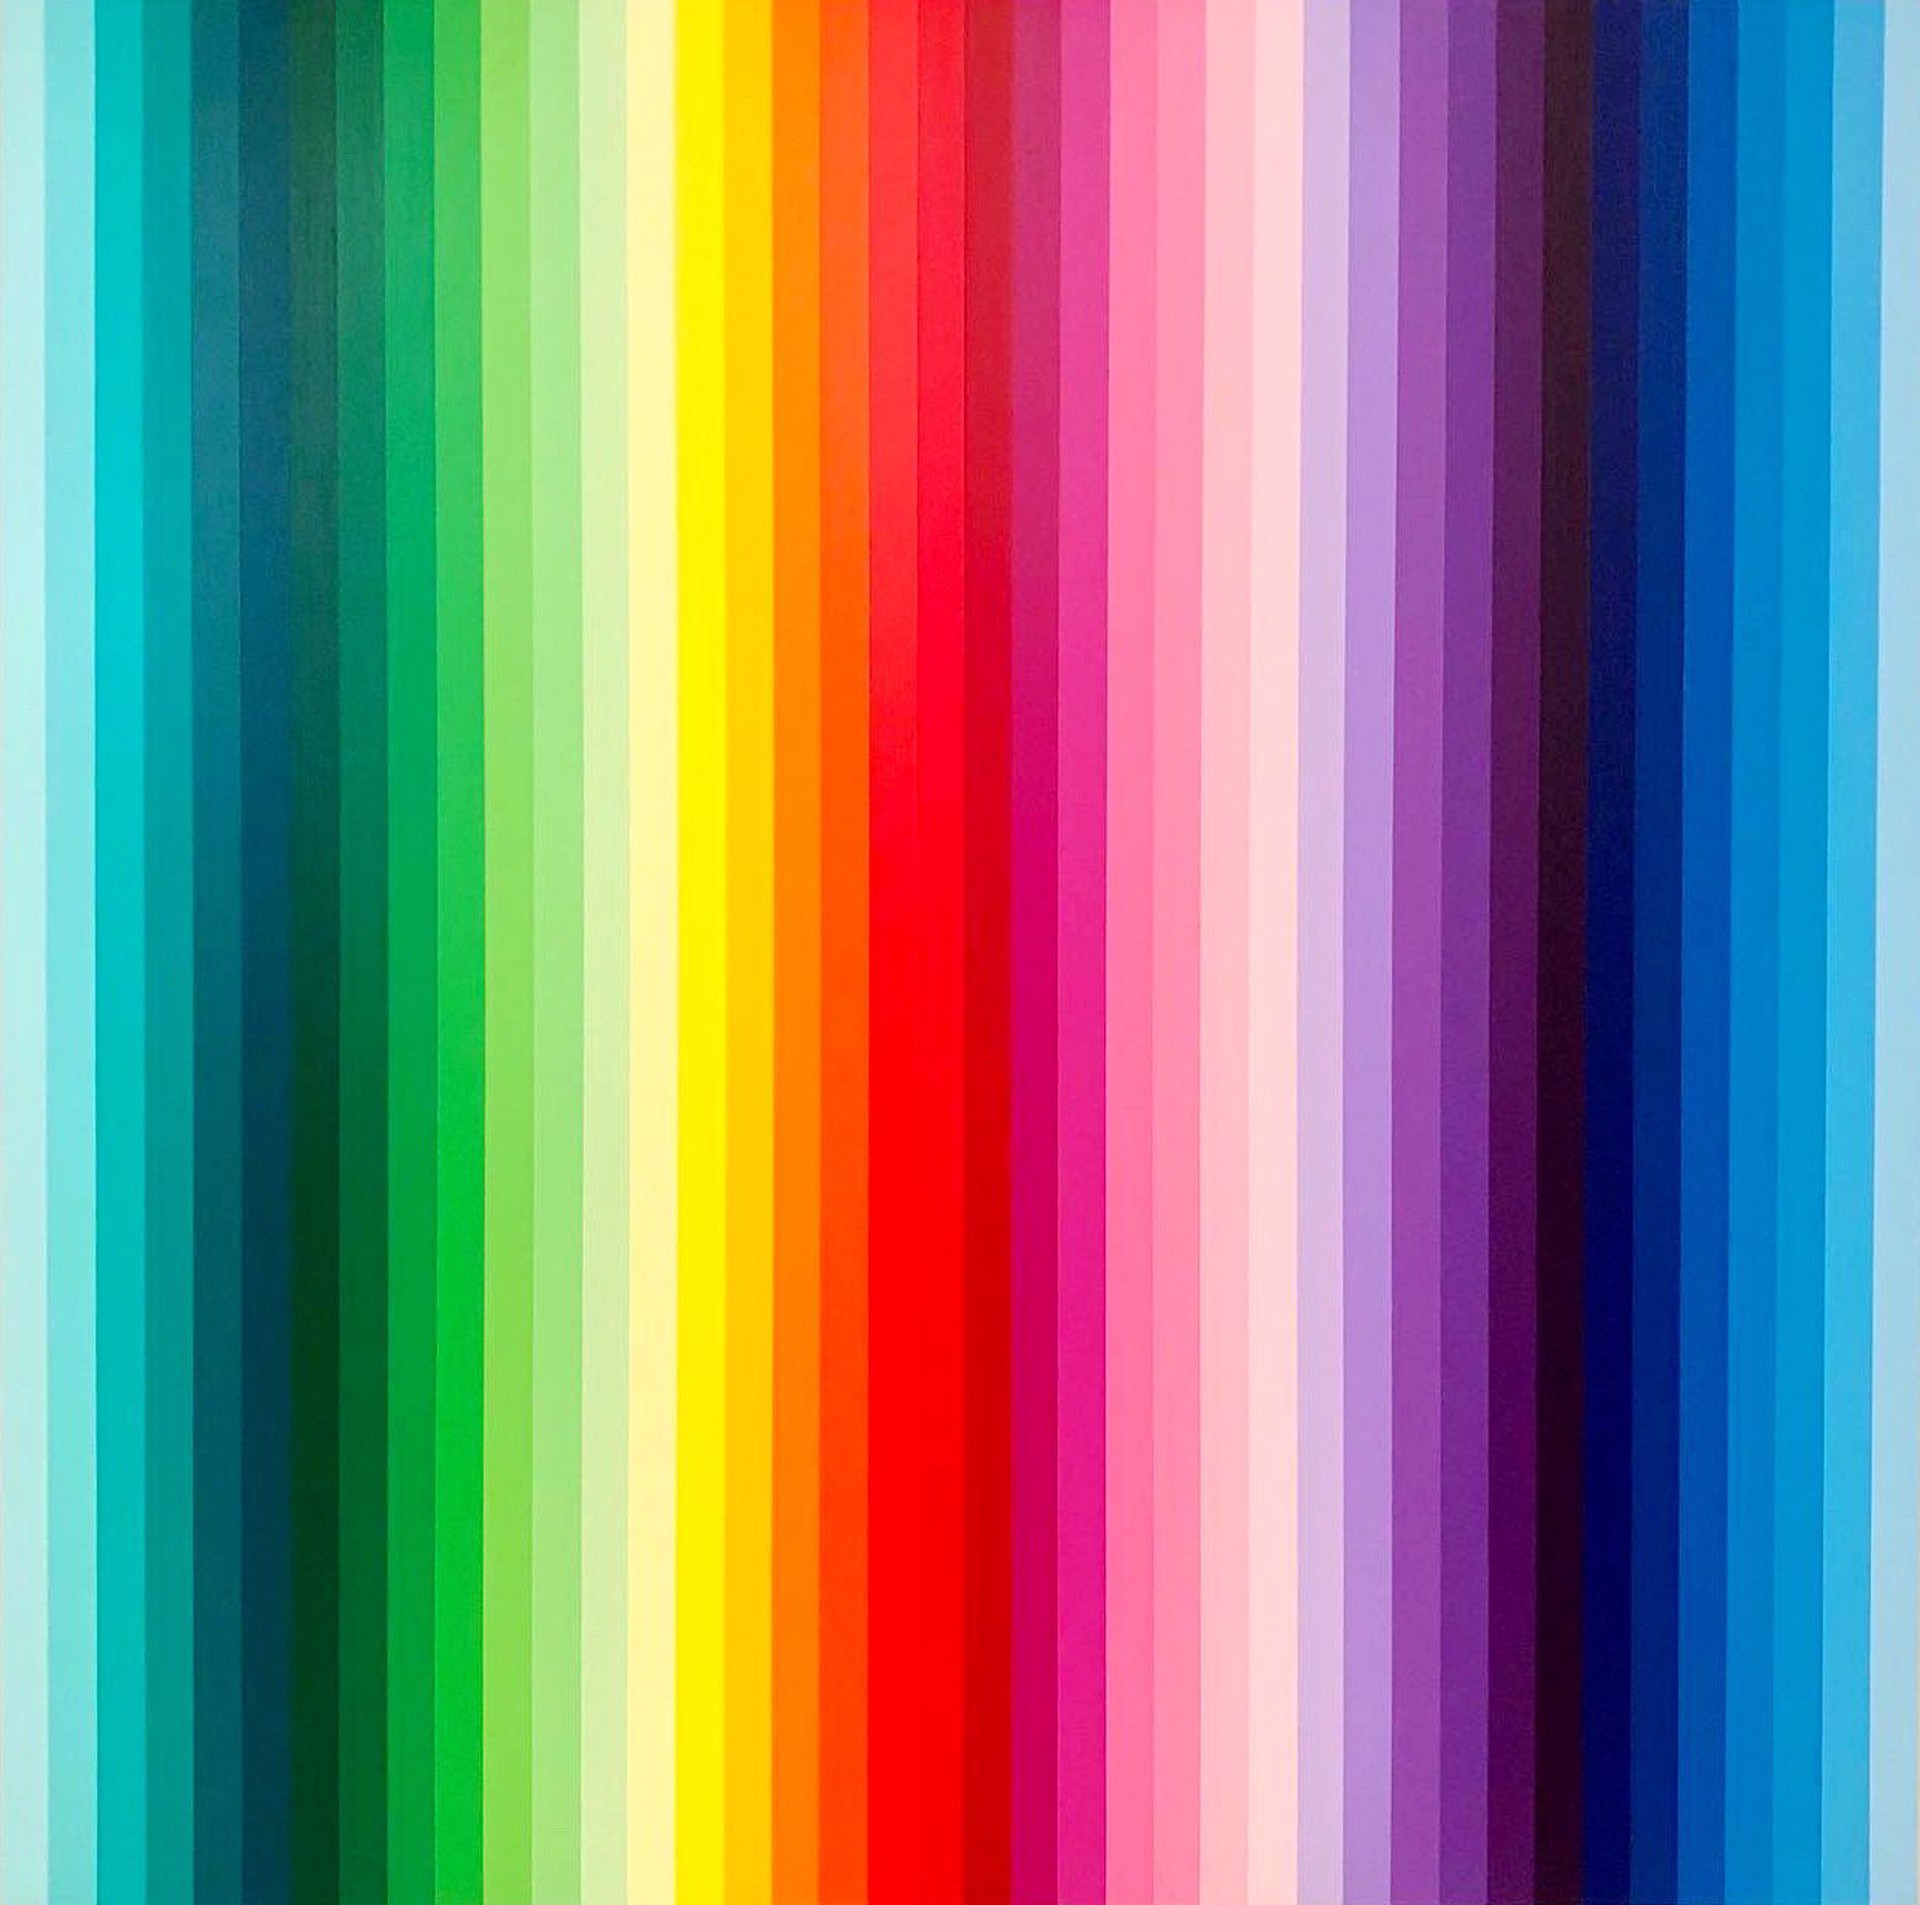 40 Shades of Pride Commission by Jarrad Tacon-Heaslip